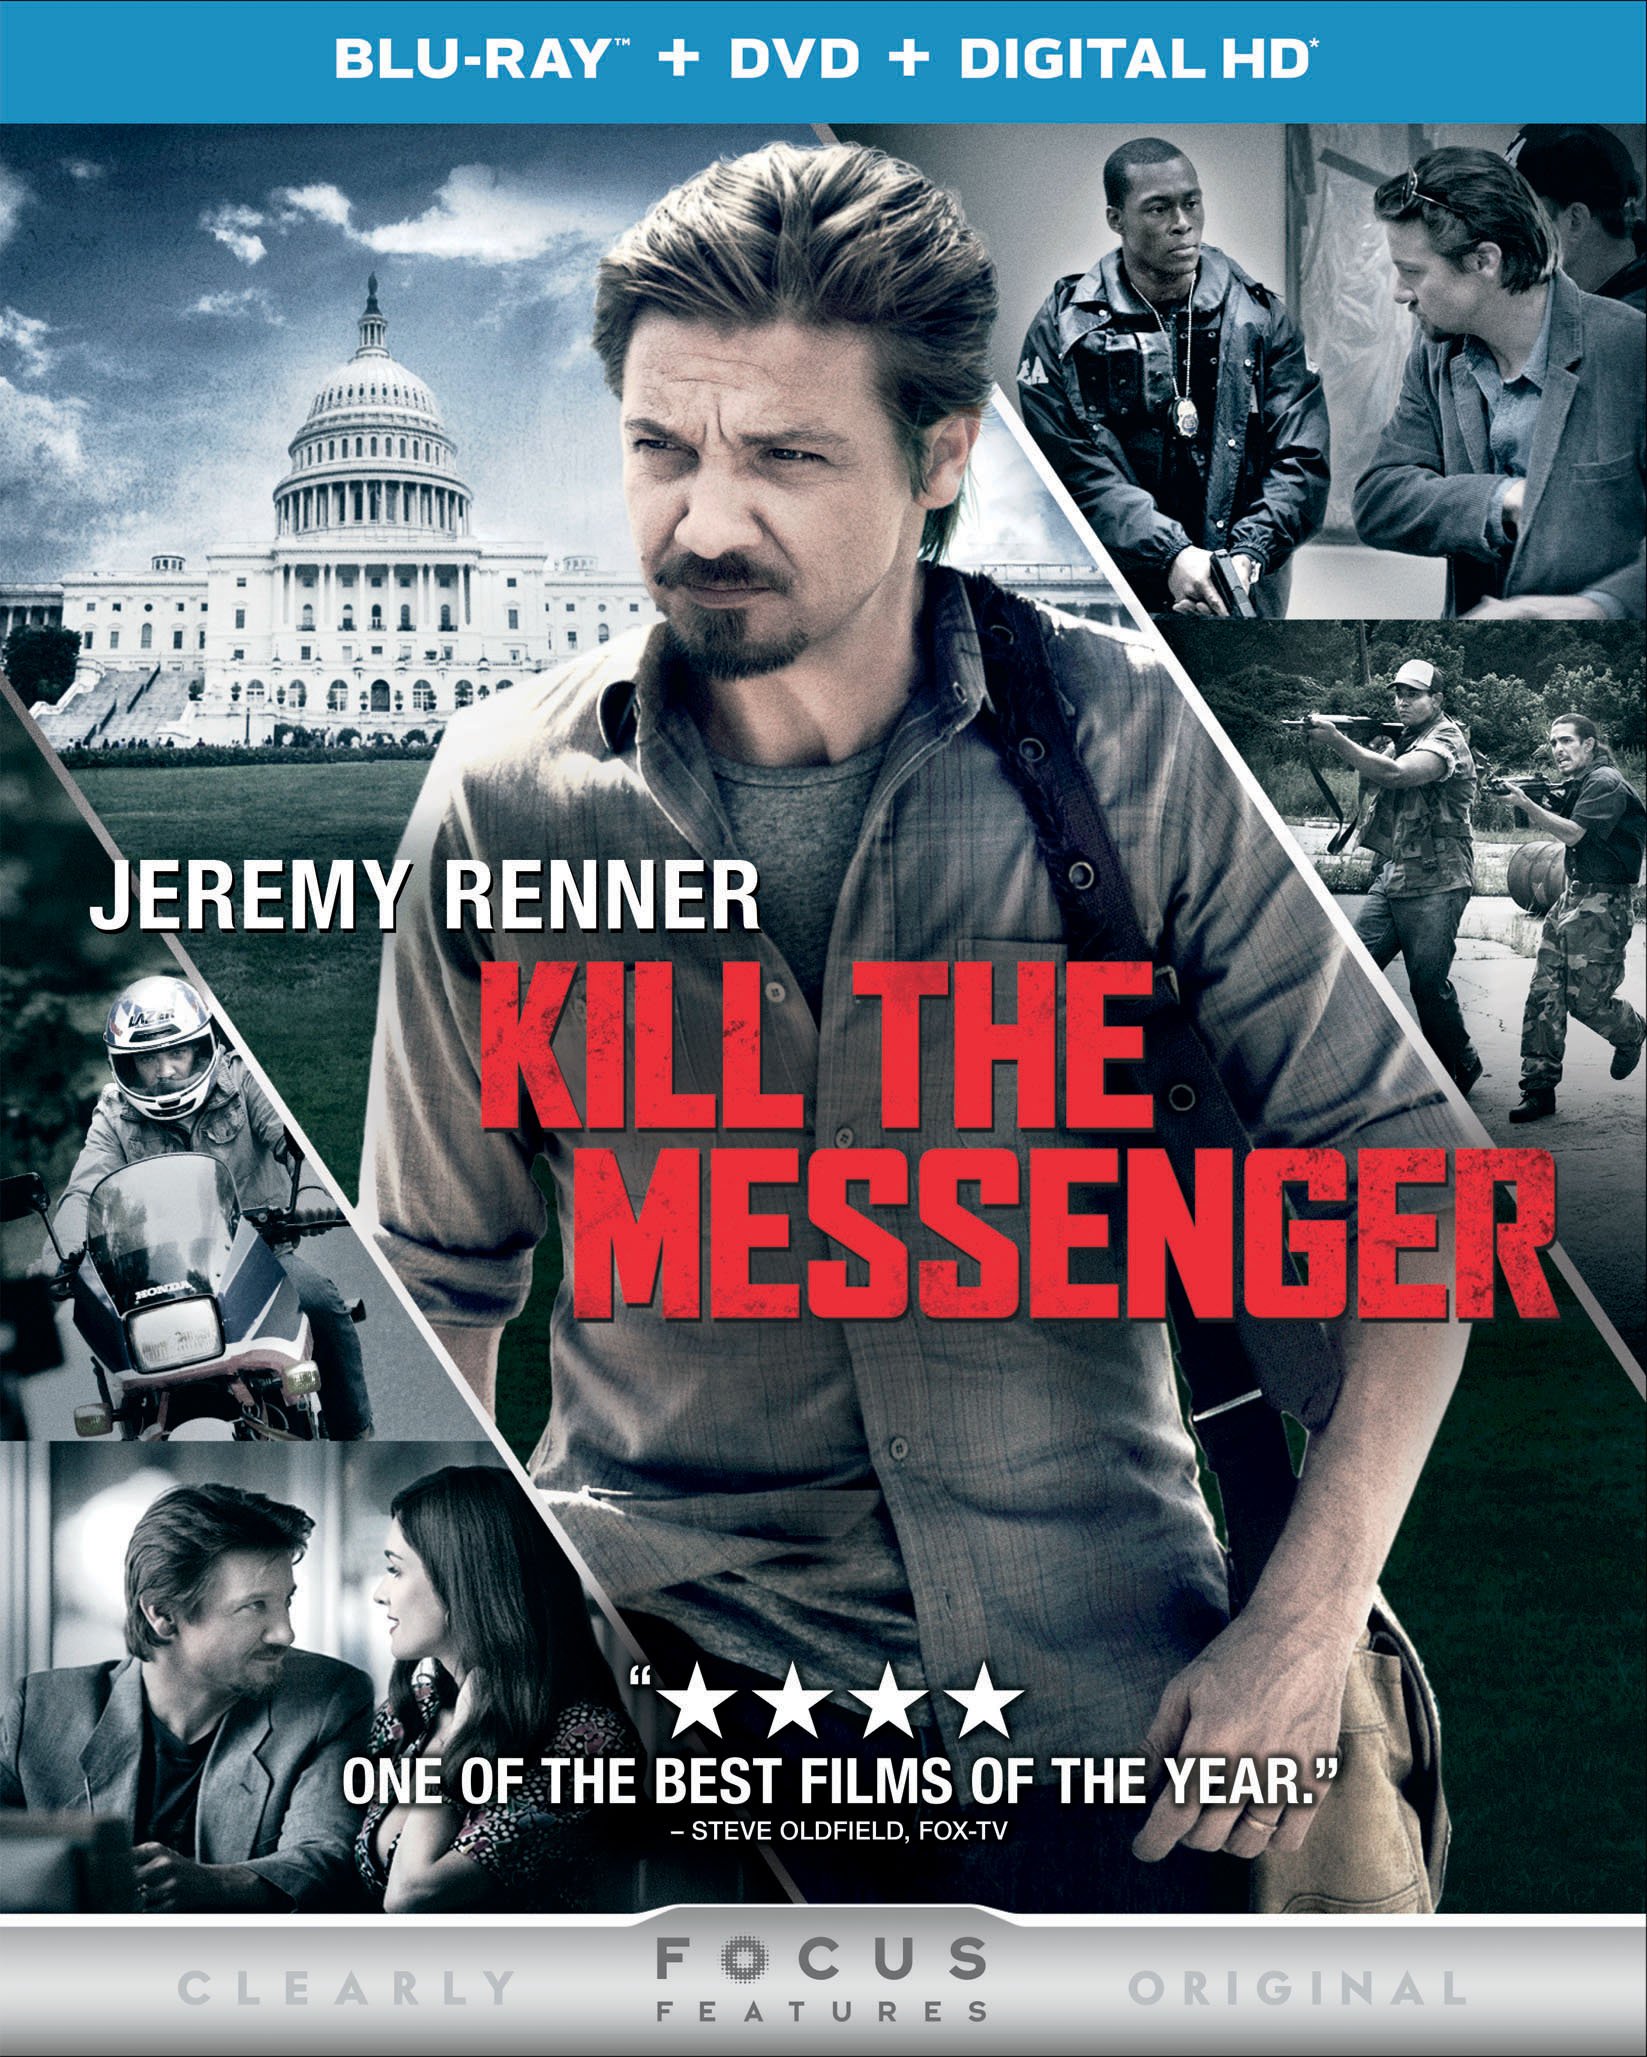 The Messenger Blu Ray